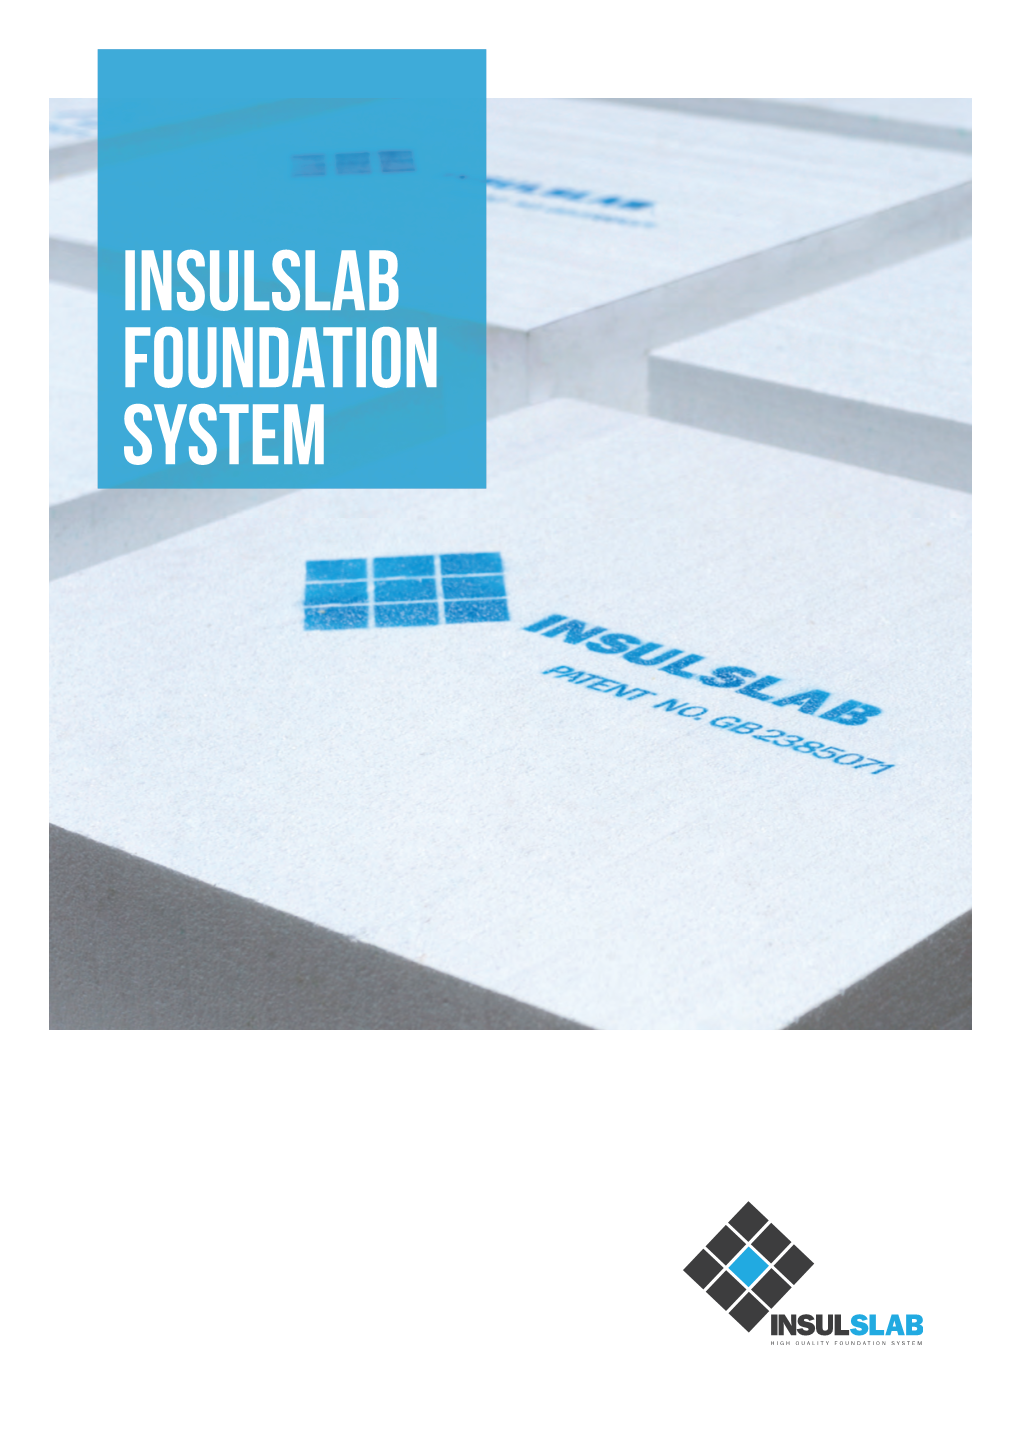 Insulslab Foundation System